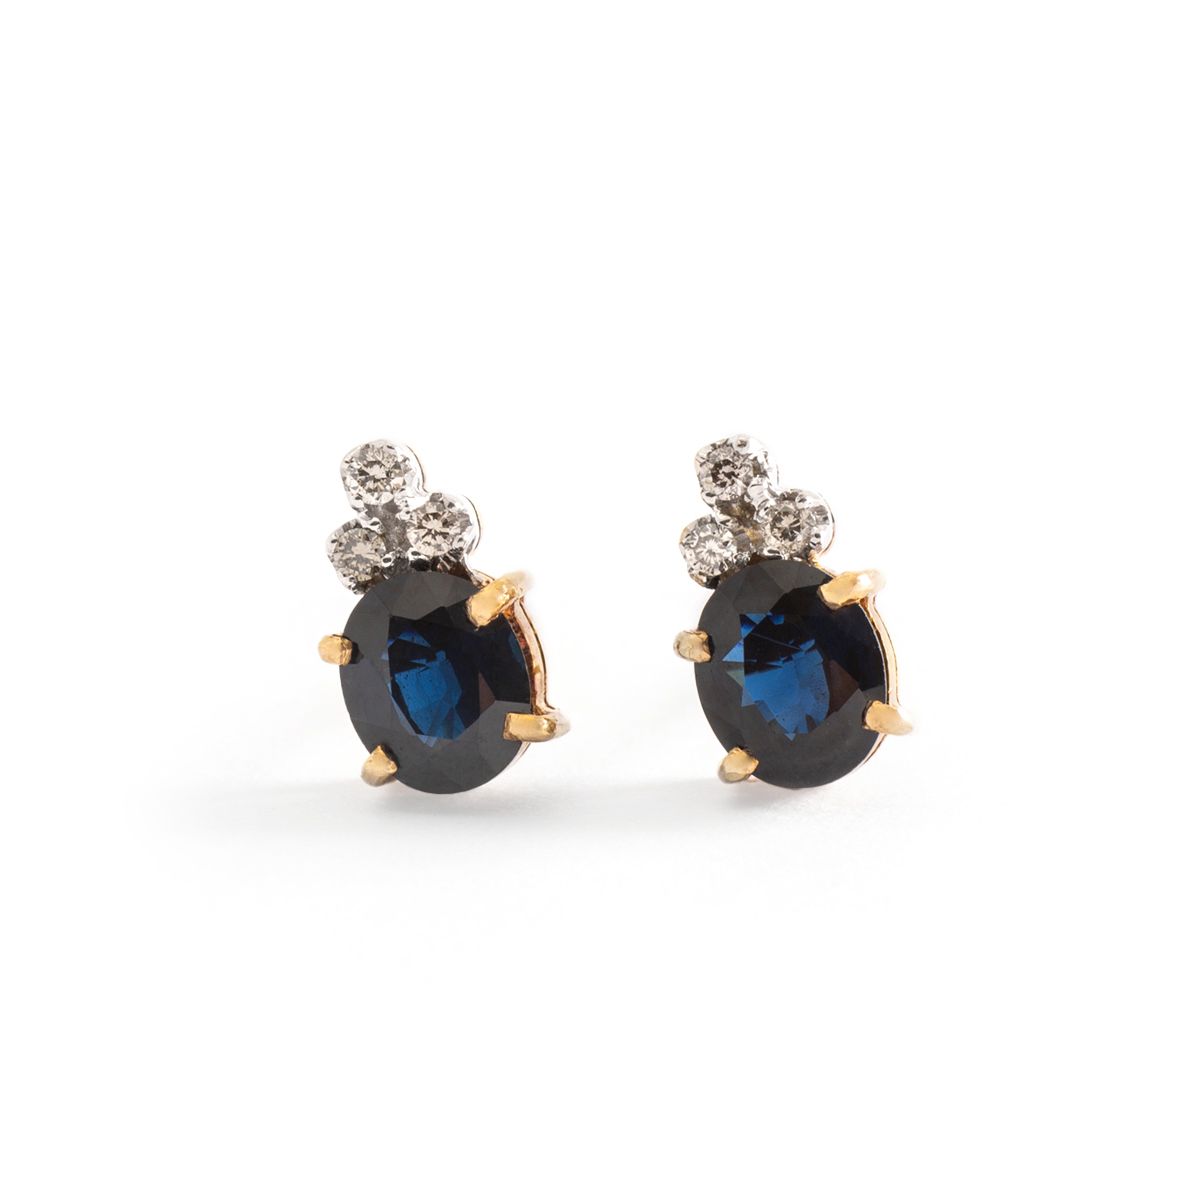 Null 18K黄金耳环，每只耳环上都镶嵌着一颗爪镶的椭圆形蓝宝石（高6.5毫米）和三颗小钻石

尺寸：10 x 0.6 mm

毛重 : 2,67 g